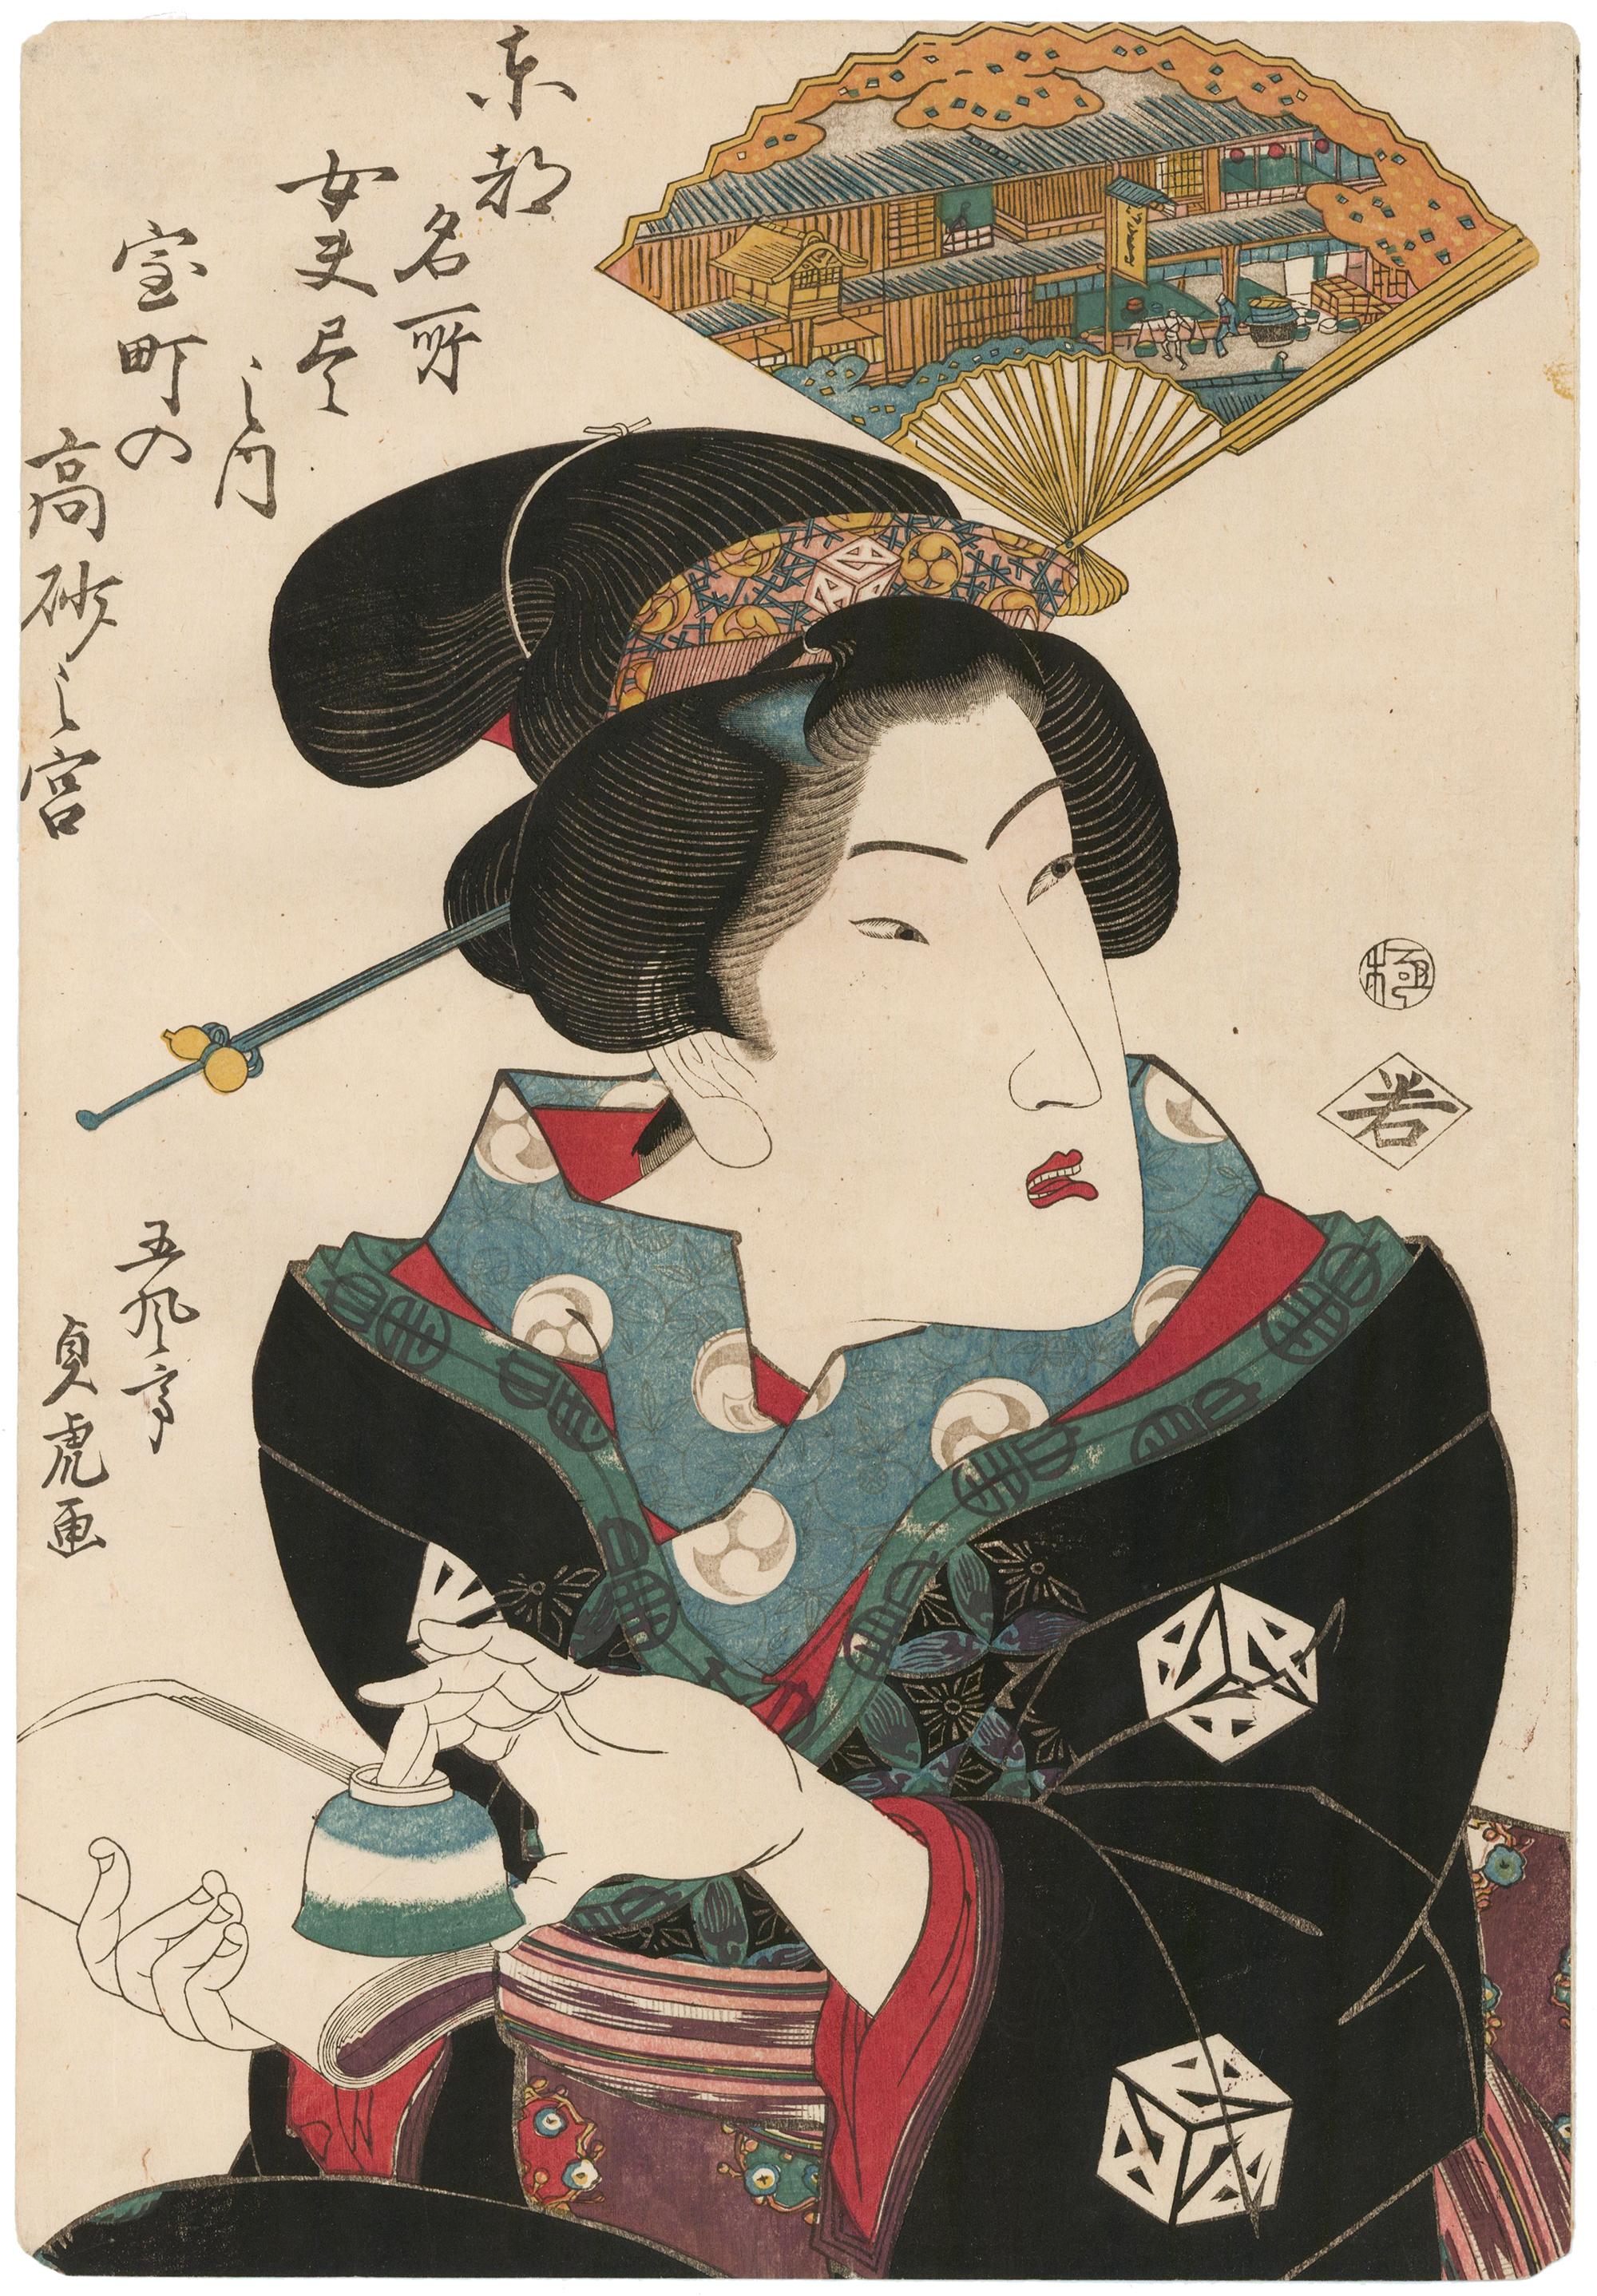 Utagawa Sadatora Portrait Print - Portrait of a Woman